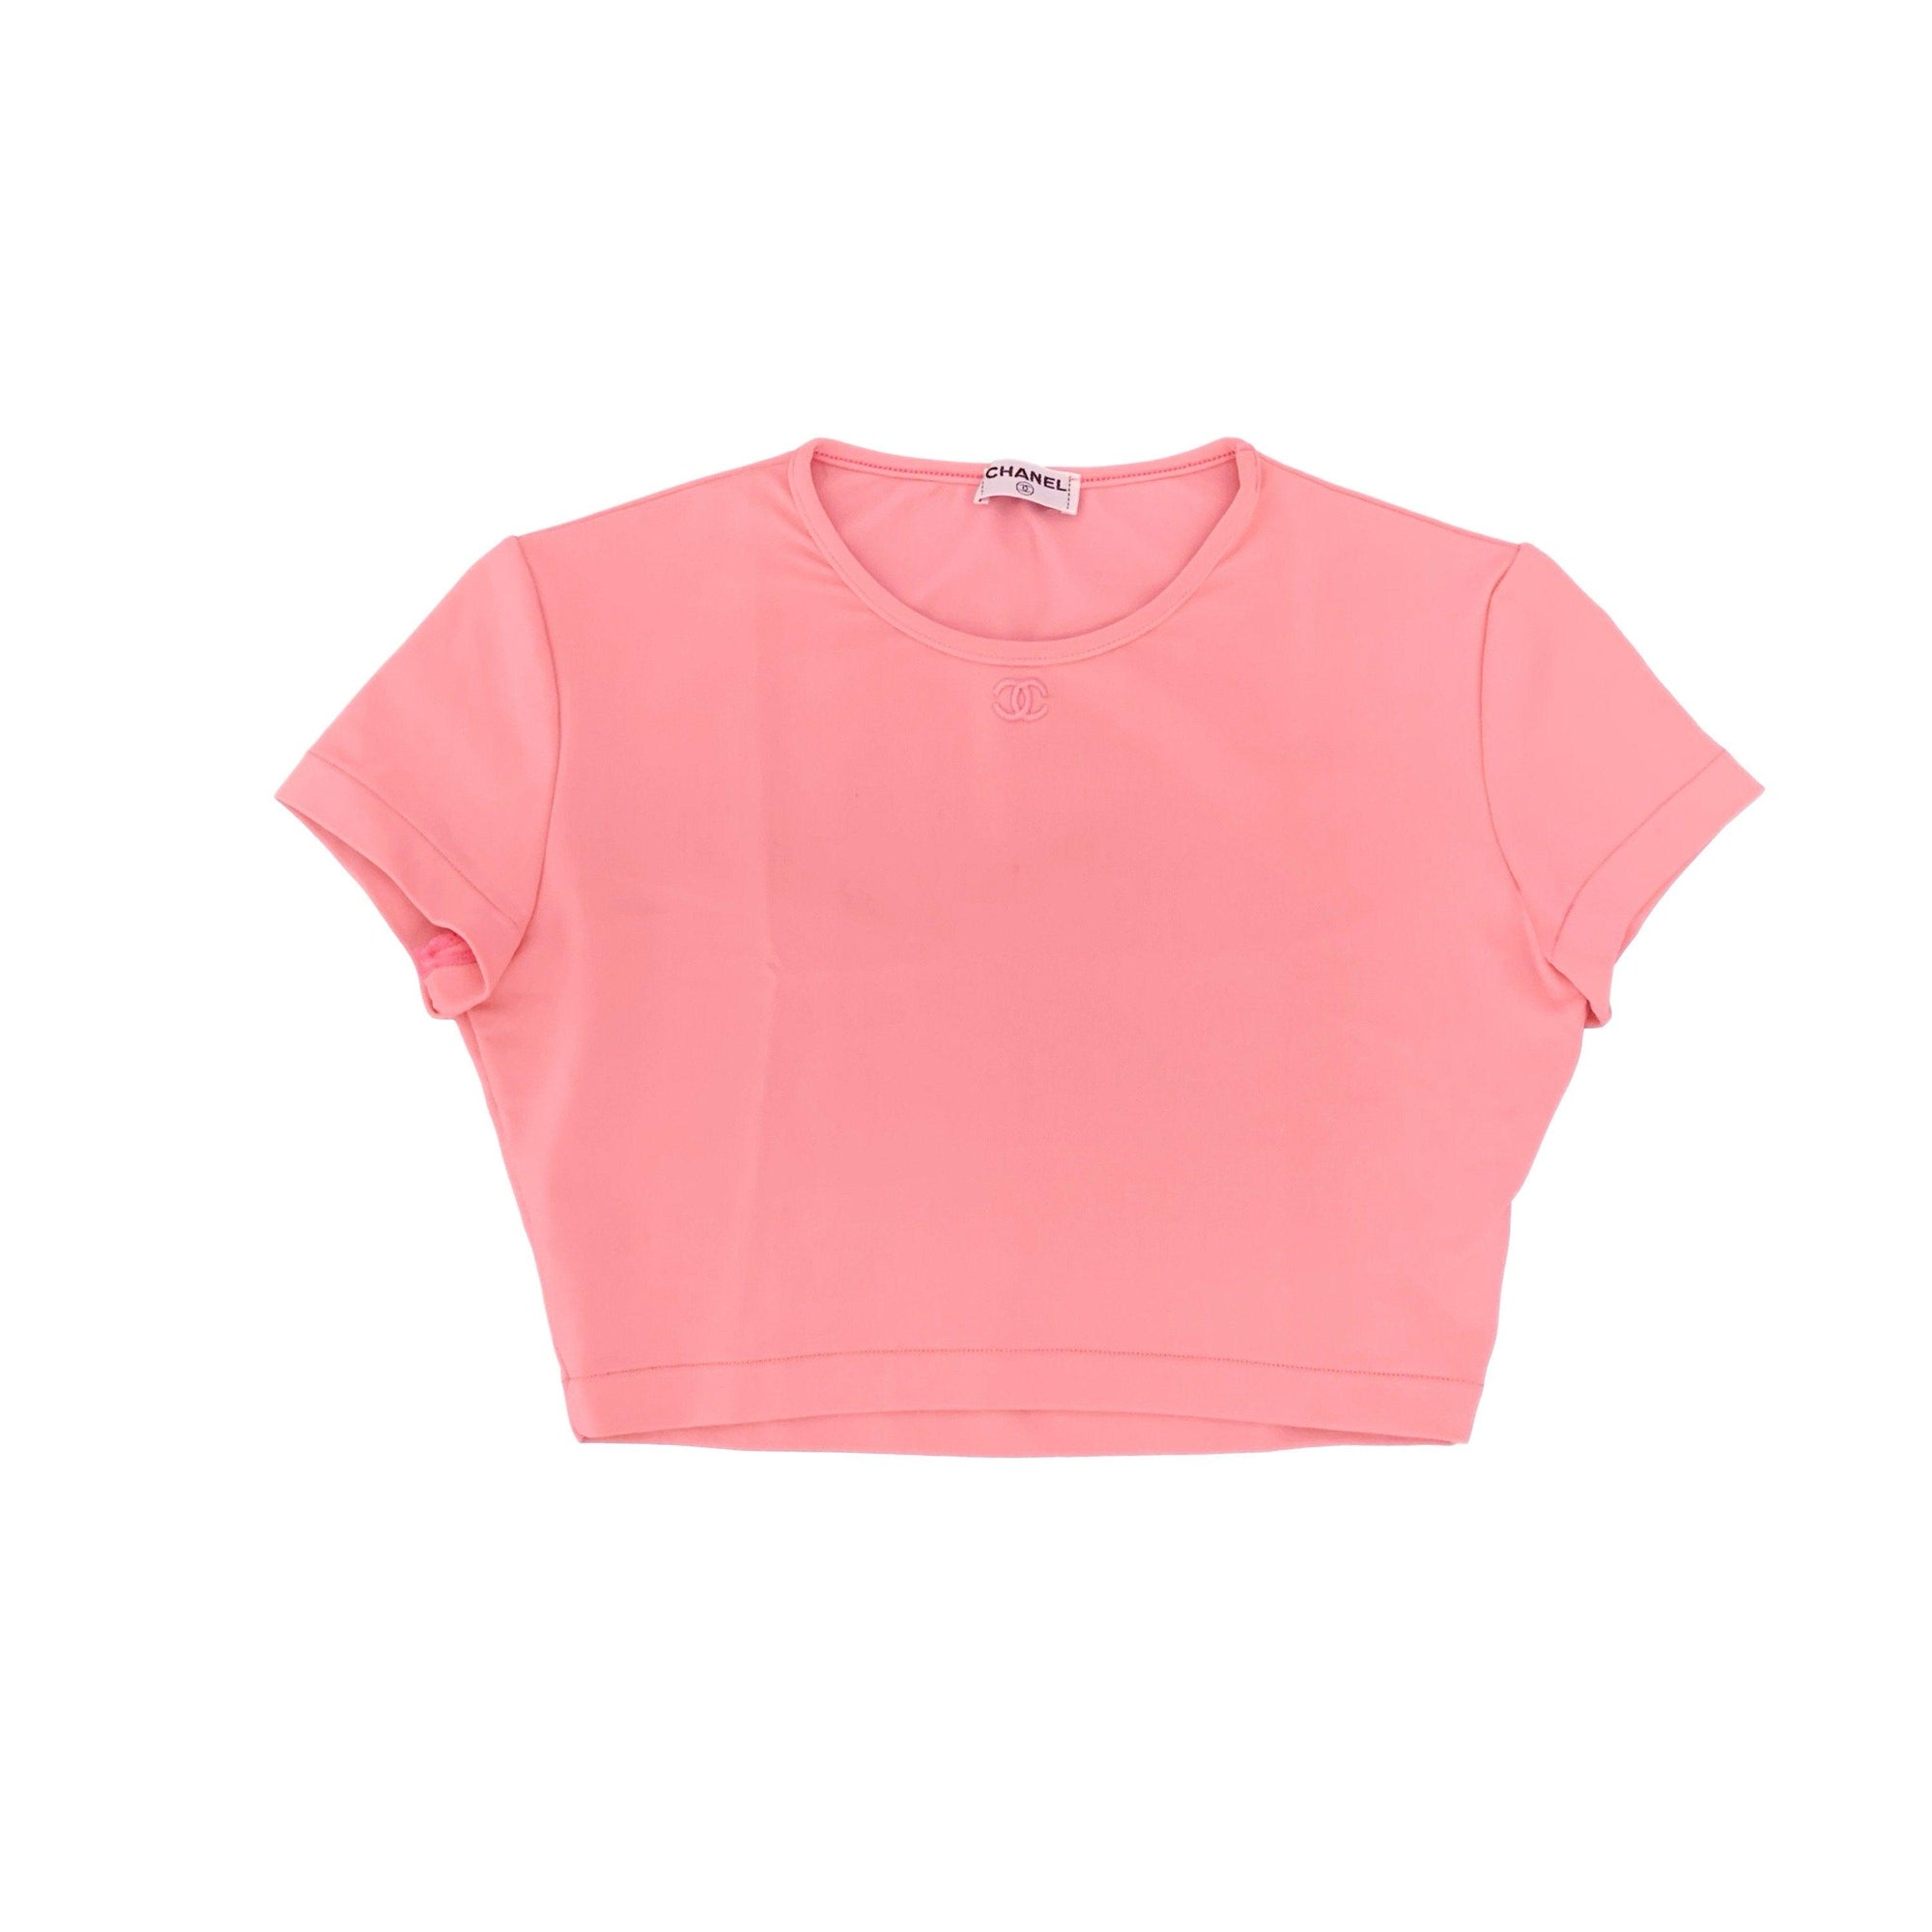 Chanel Baby Pink Logo Crop Top - Apparel